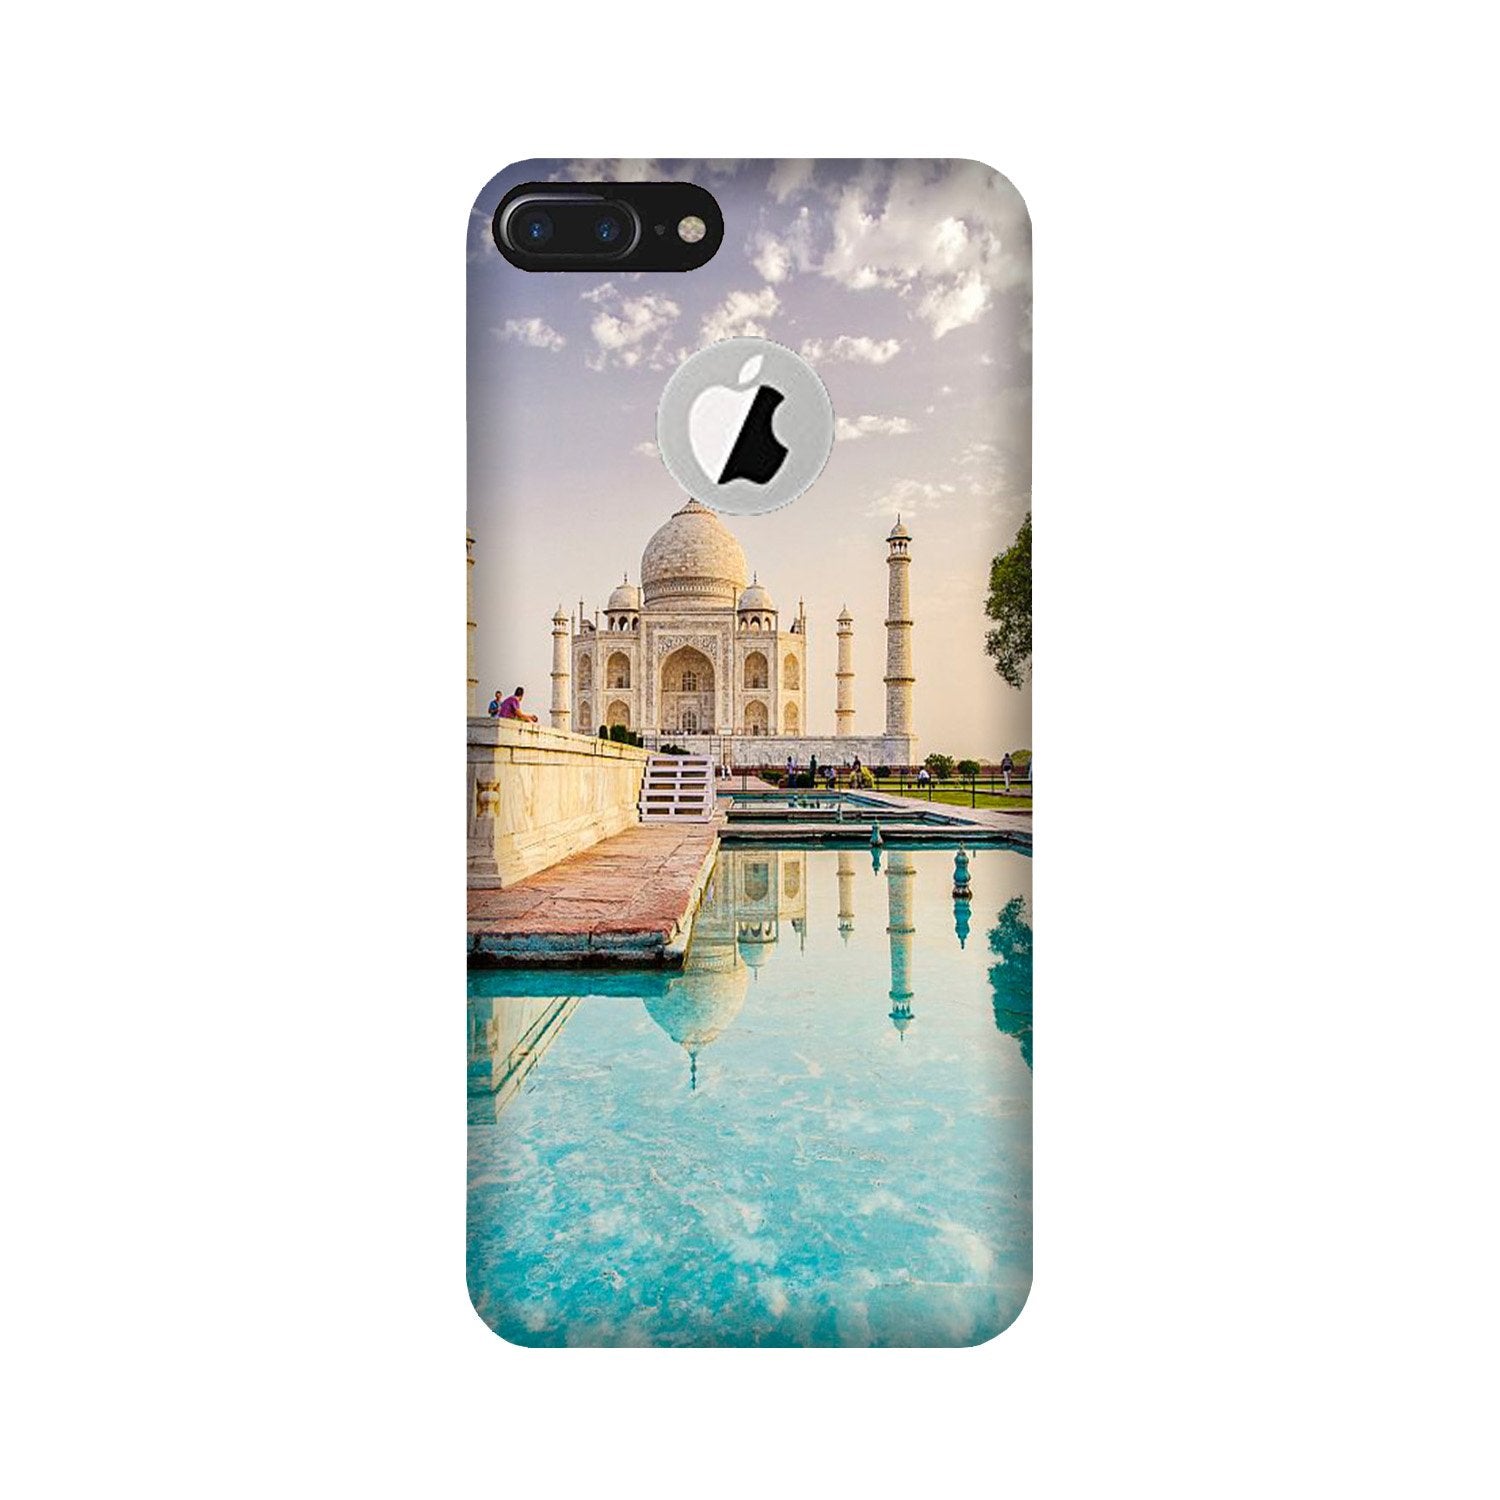 Taj Mahal Case for iPhone 7 Plus logo cut (Design No. 297)